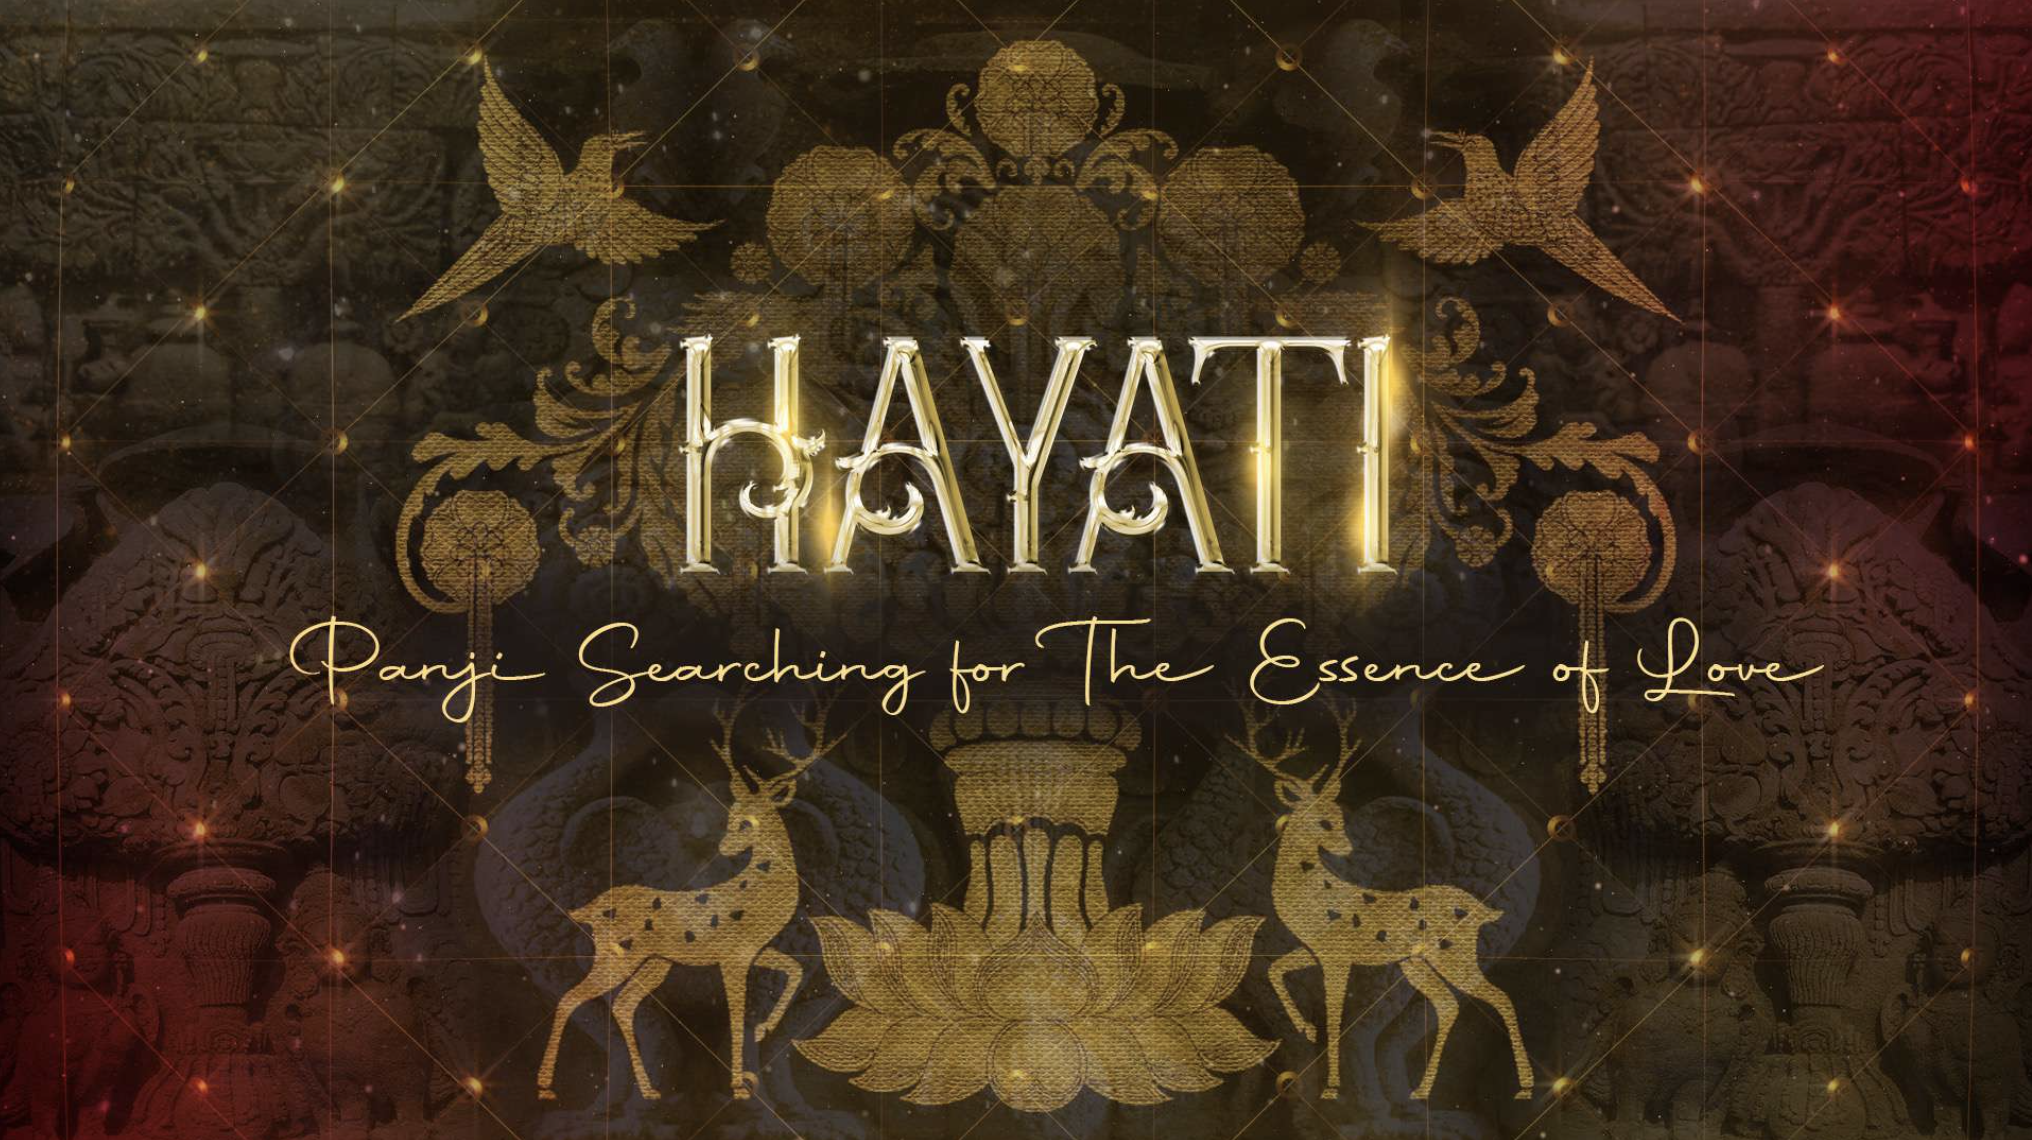 HAYATI: Panji Searching for the Essence of Love